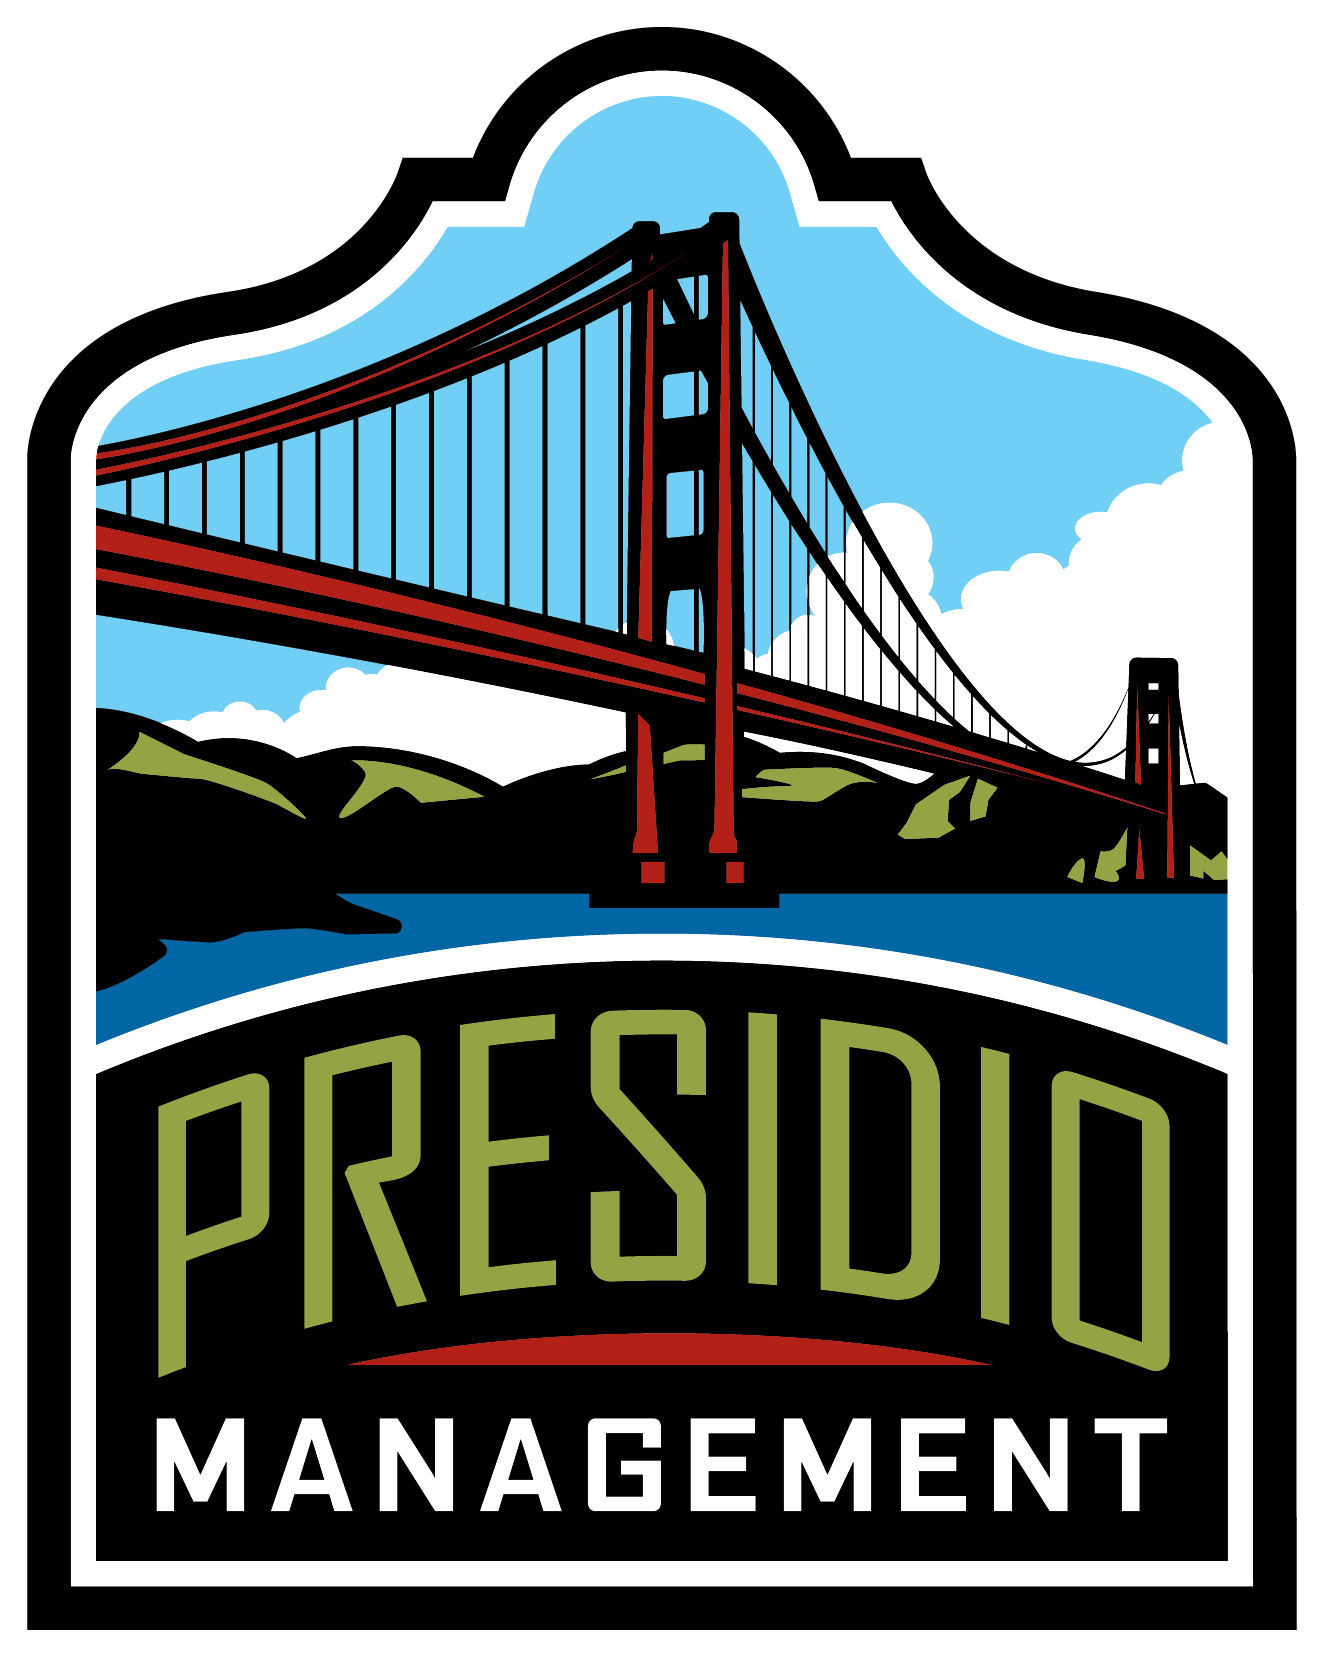 Presidio Management | Marketing, Management, &amp; Consulting